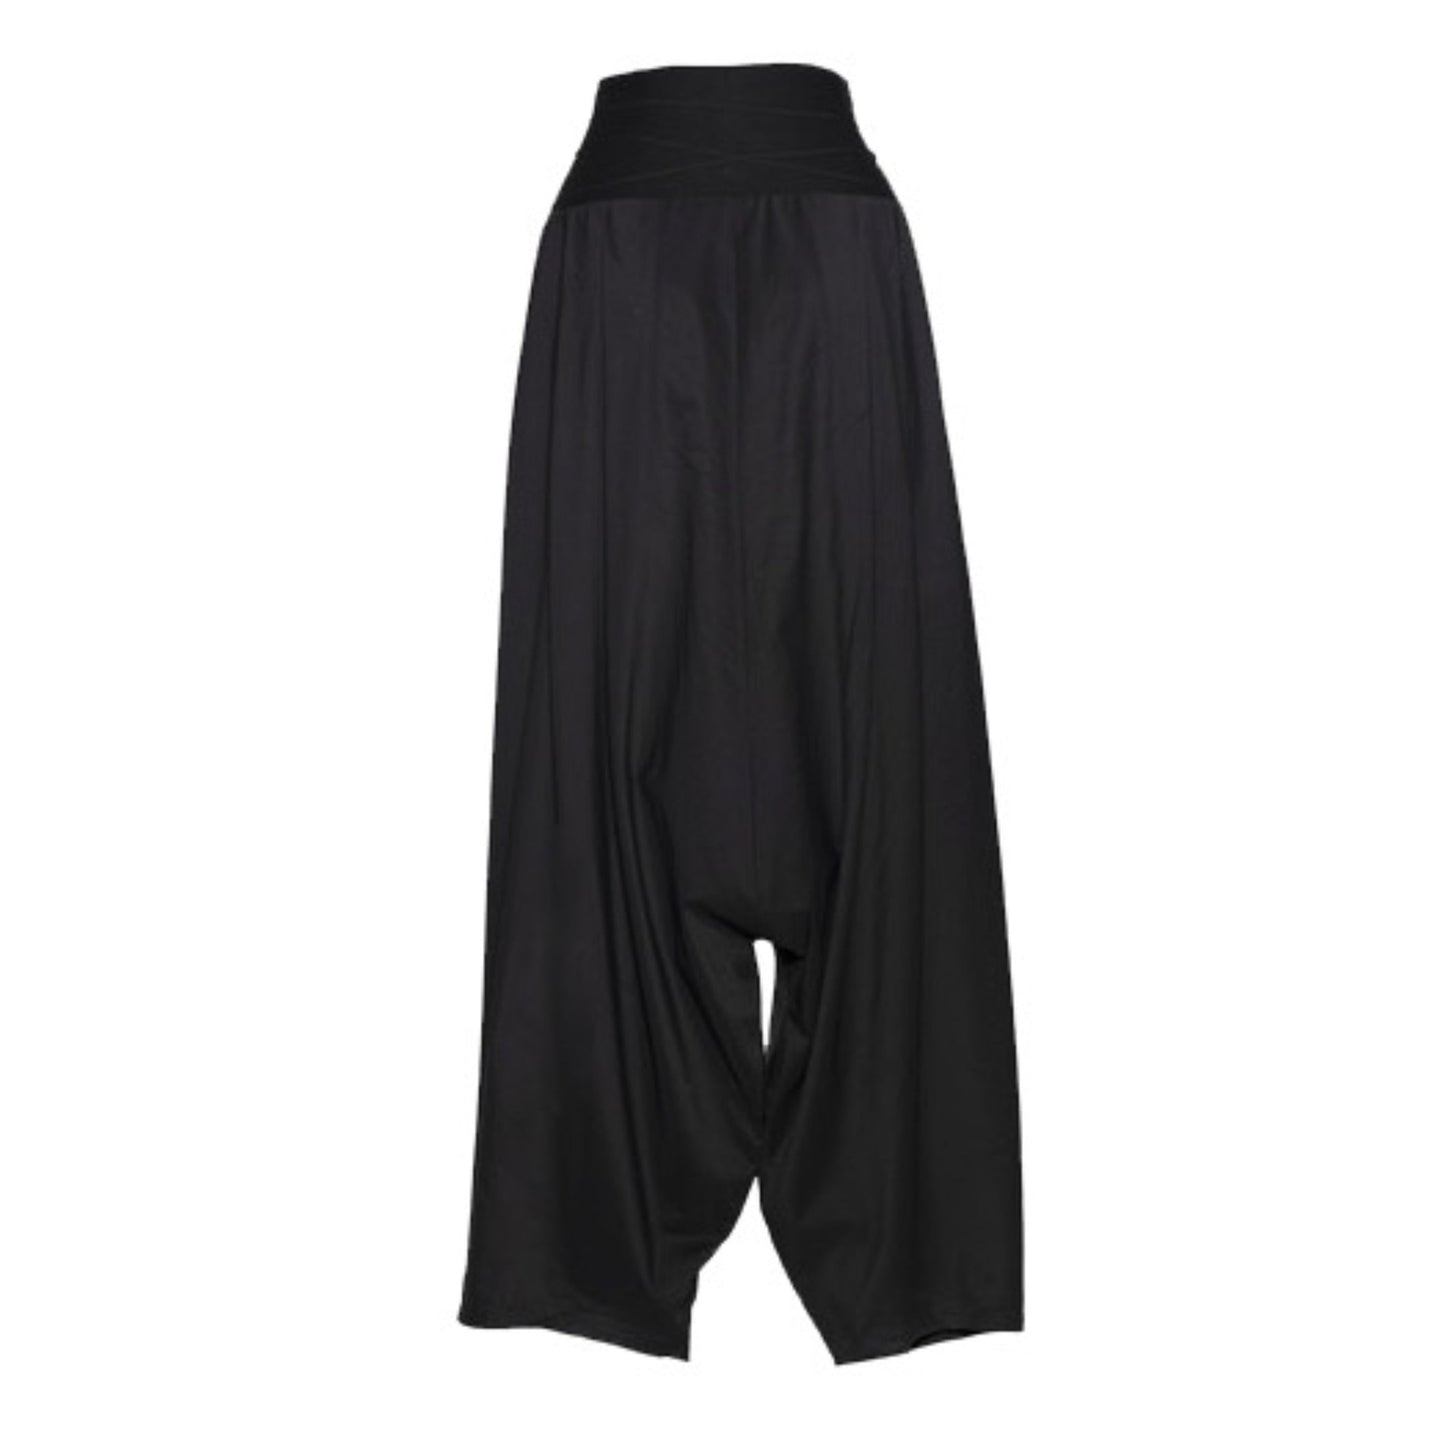 Black Modal Cotton Drop Crotch Pants with Stretchable Waistband